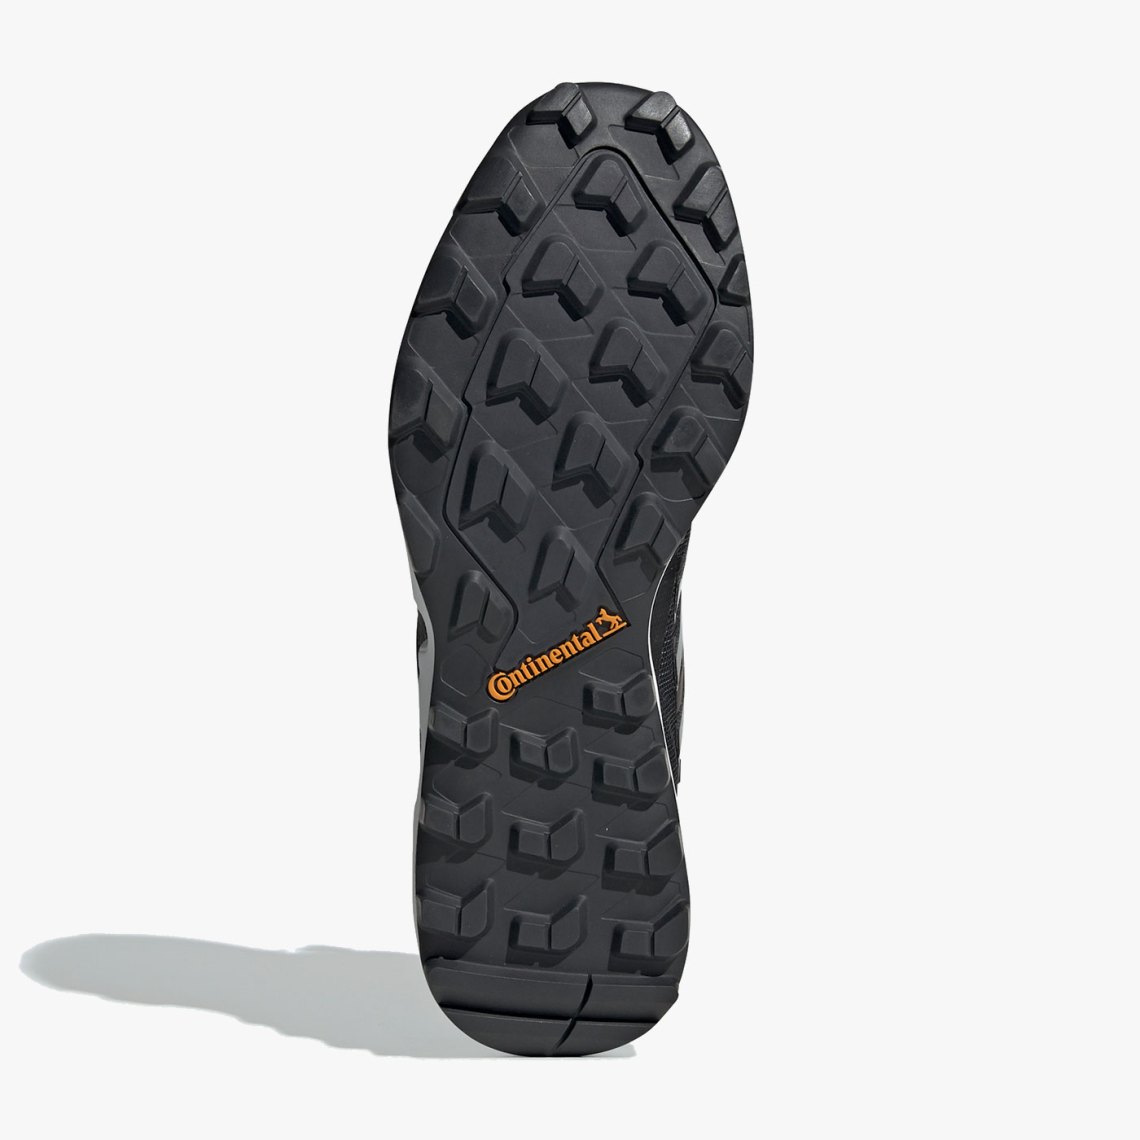 White Mountaineering adidas Terrex Release Info | SneakerNews.com